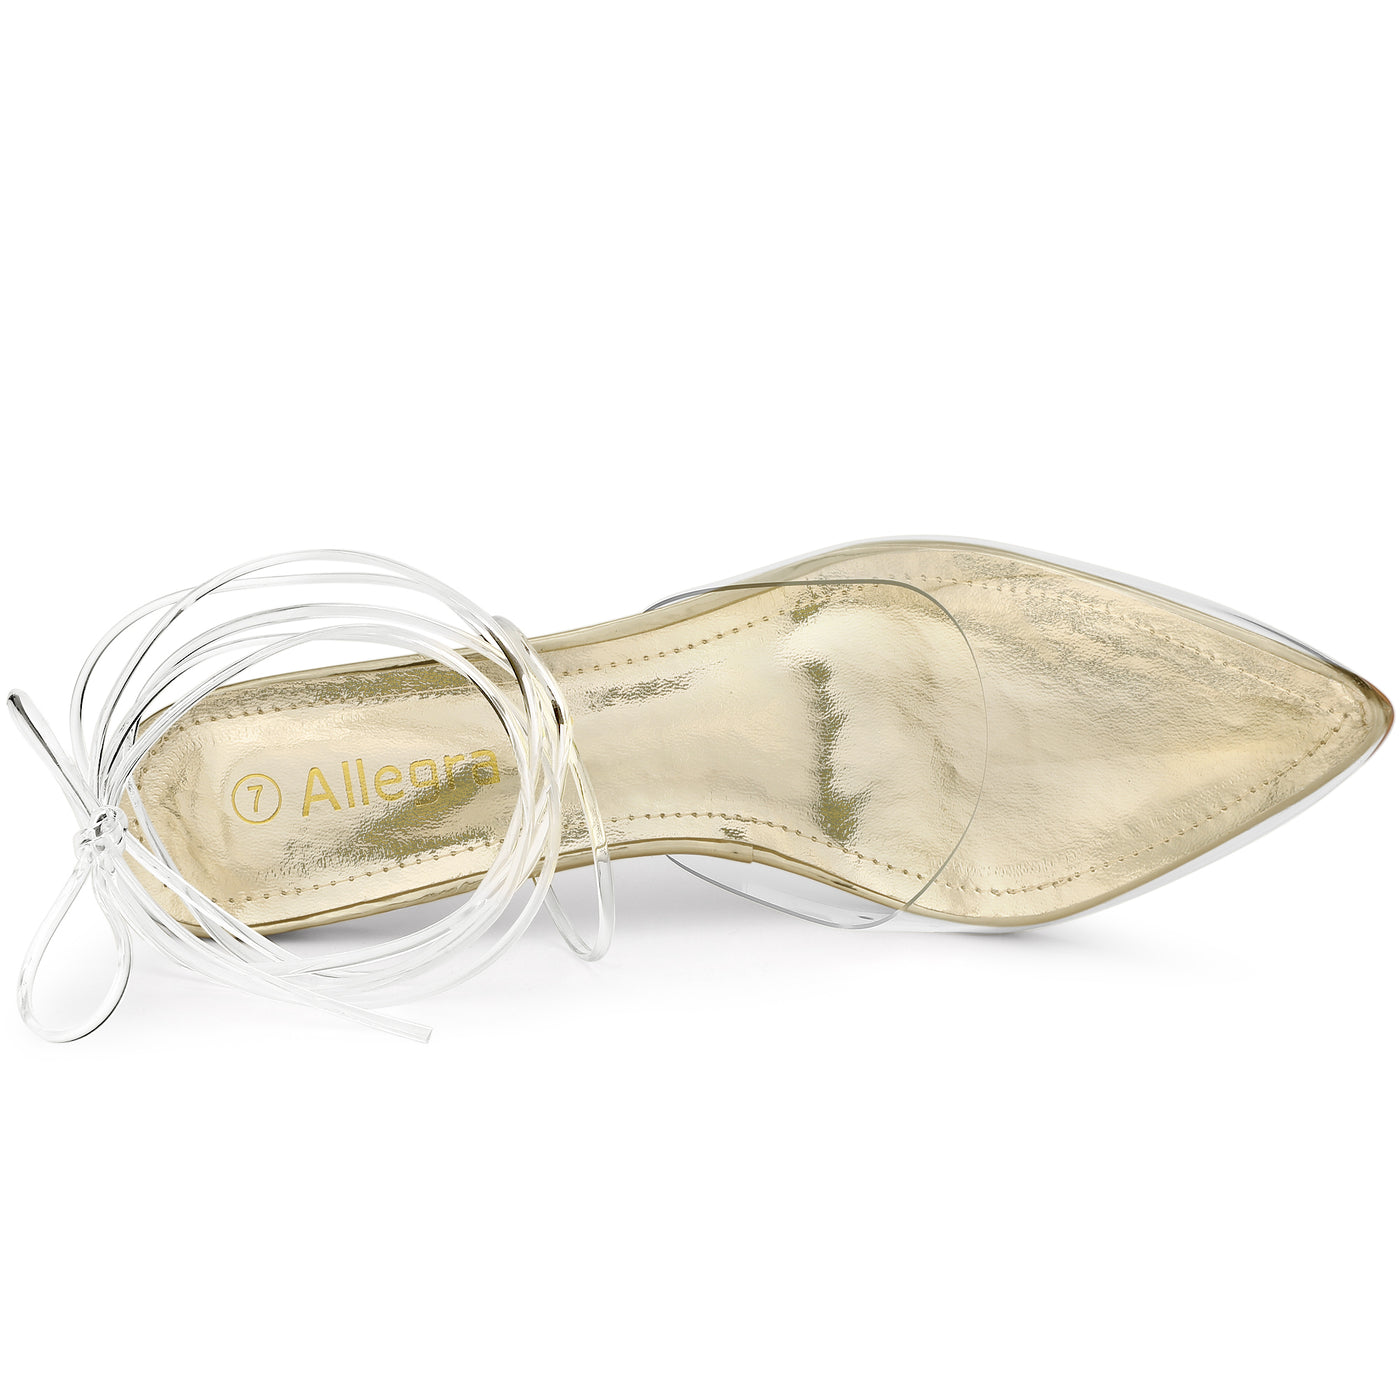 Allegra K Clear Lace Up Strappy Stiletto Transparent Heel Sandals